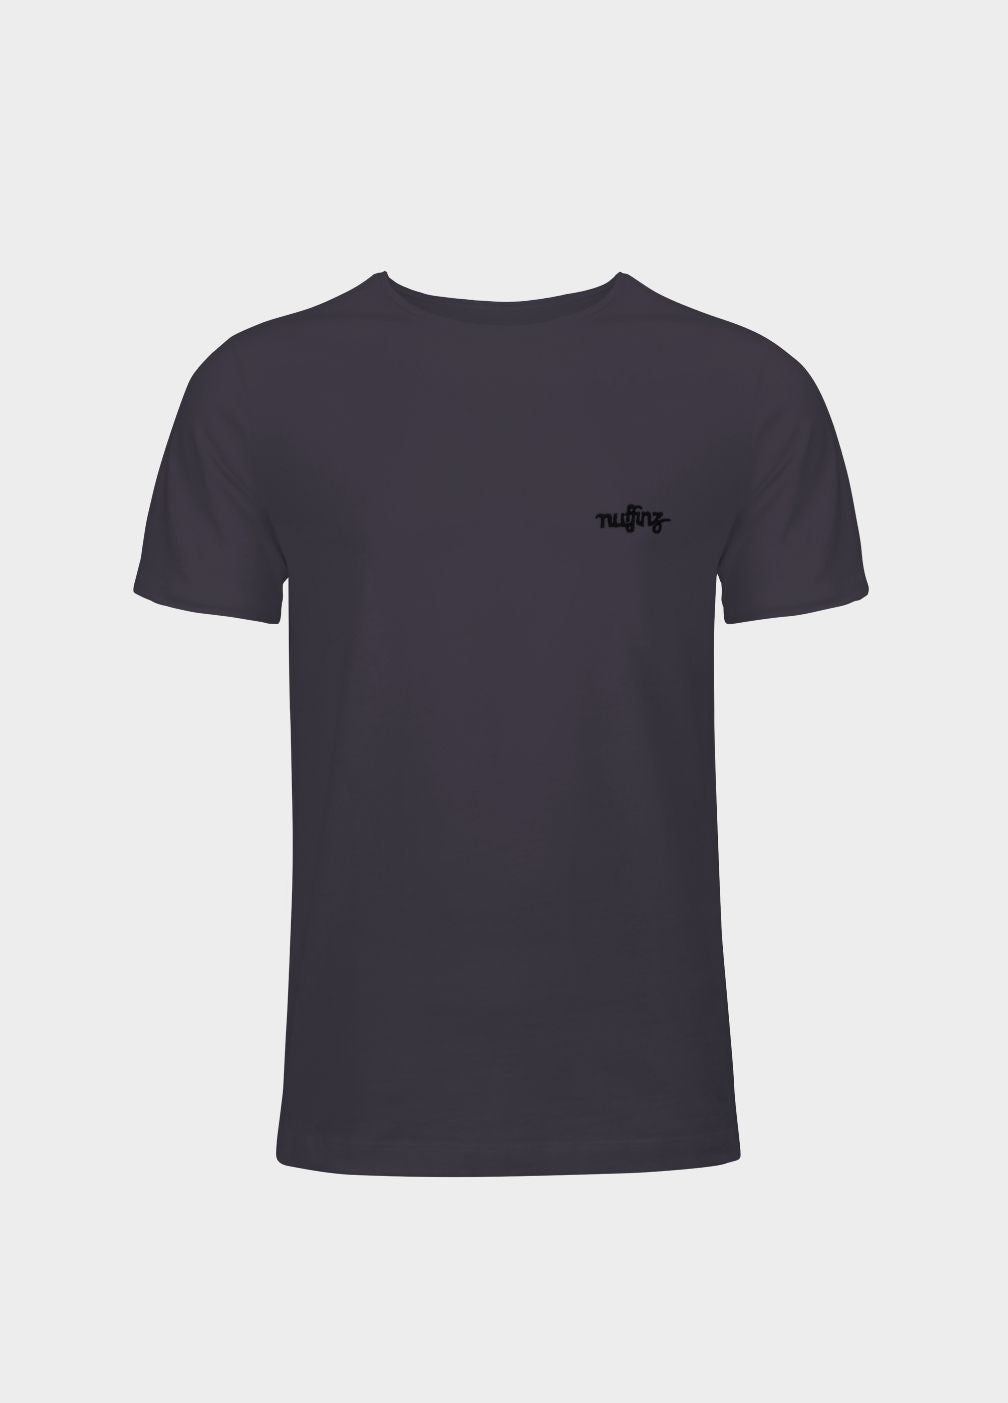 nuffinz menswear- t shirts - EBONY T-SHIRT PURE - 100% organic cotton - carbonized - dark grey unicolor